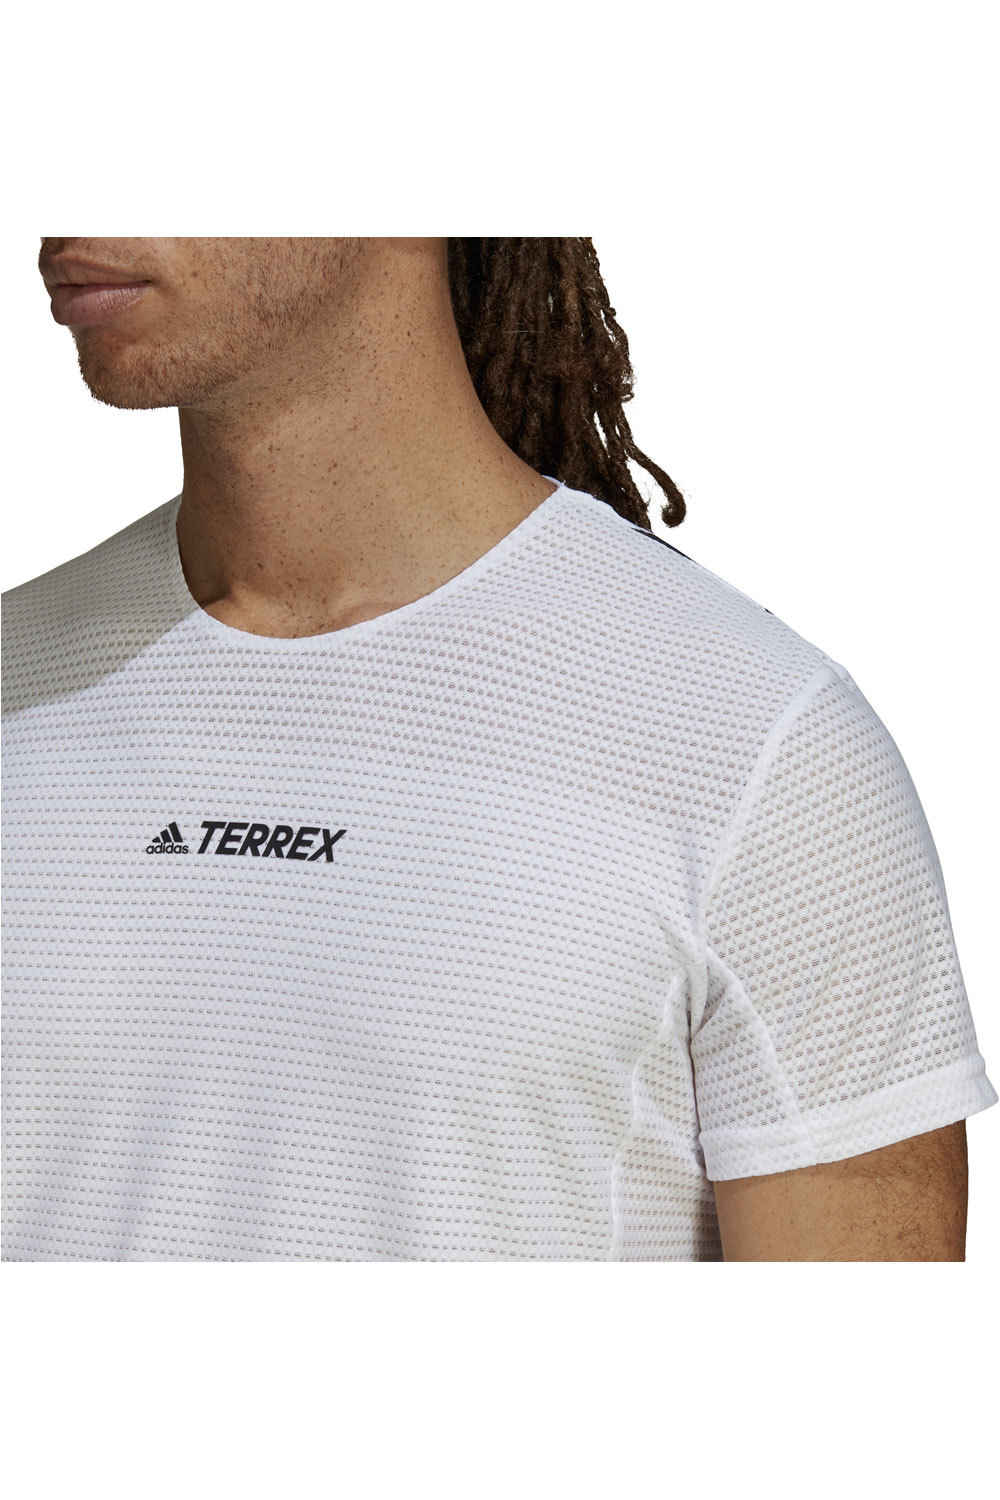 adidas camisetas trail running manga corta hombre Terrex Agravic Pro 03